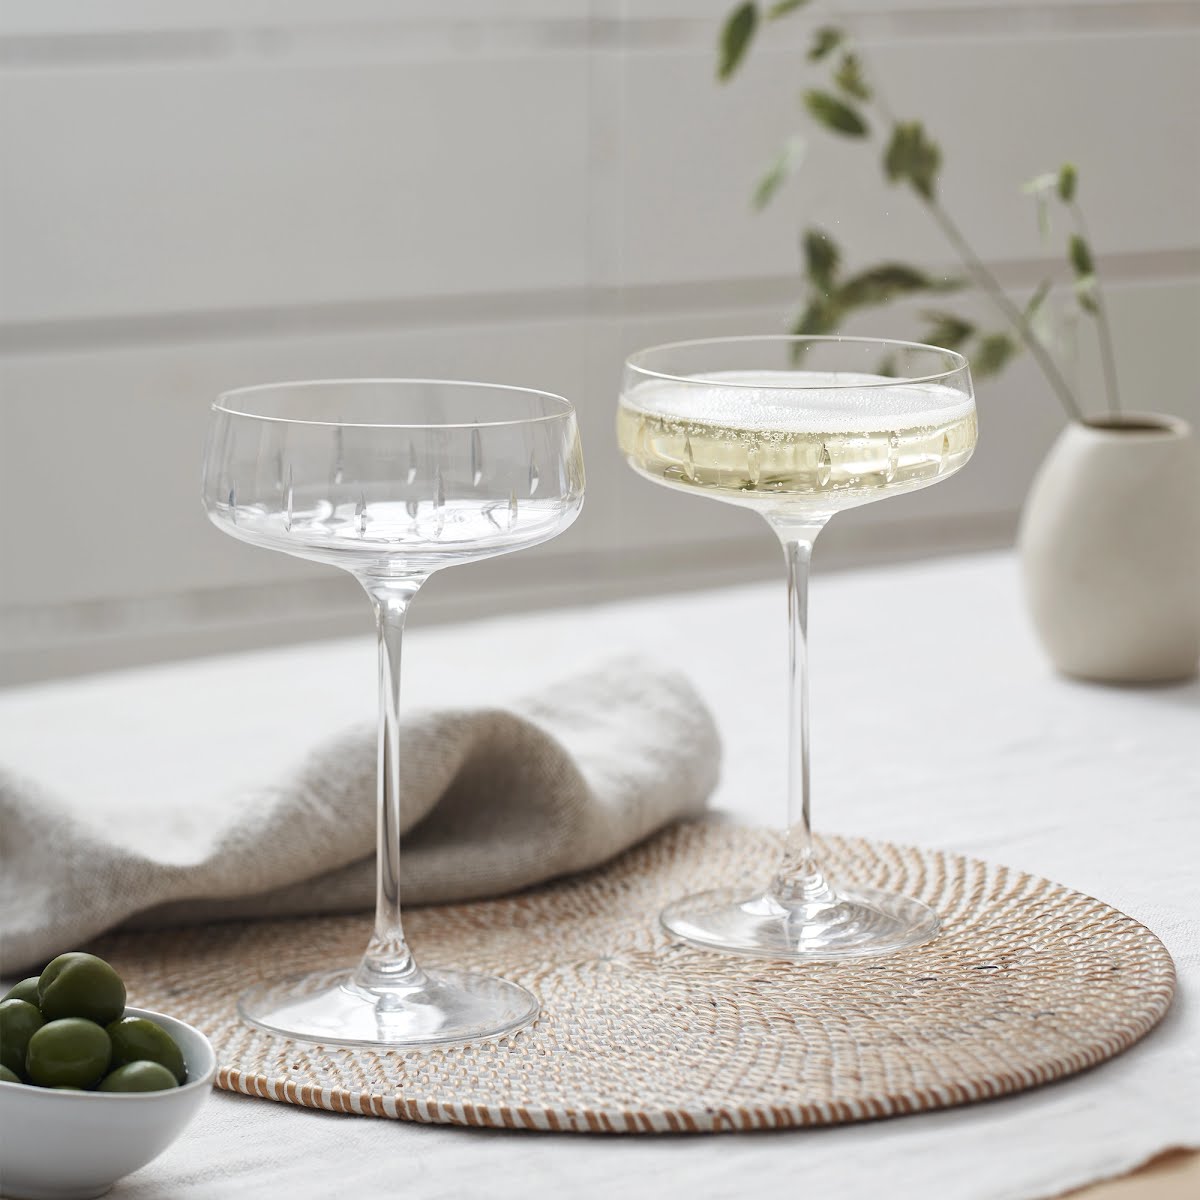 Monroe cut glass champagne coupes, €63, The White Company